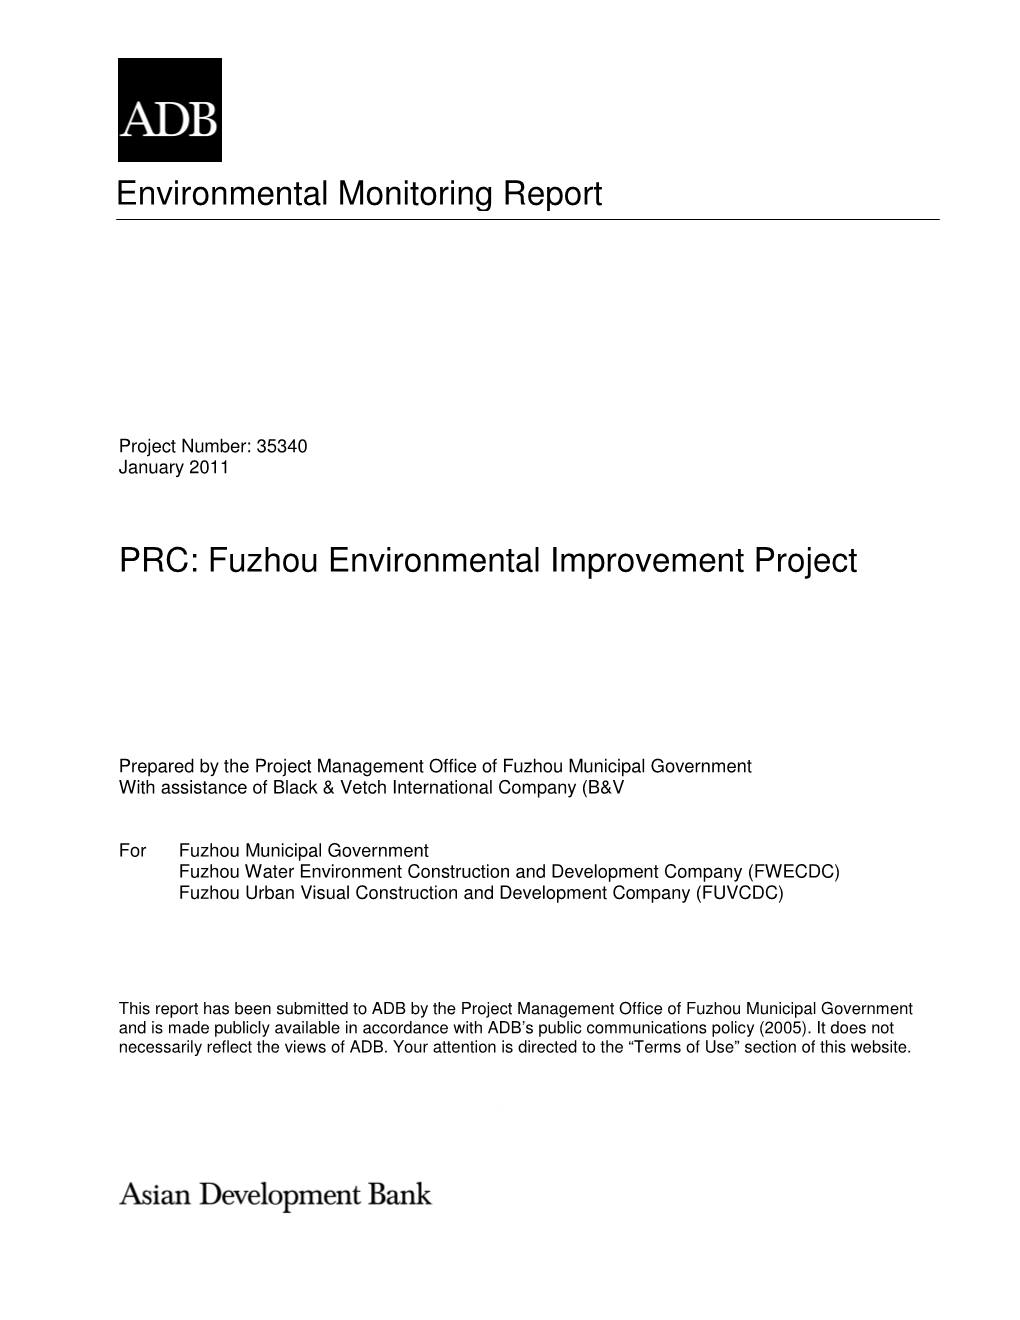 Fuzhou Environmental Improvement Project